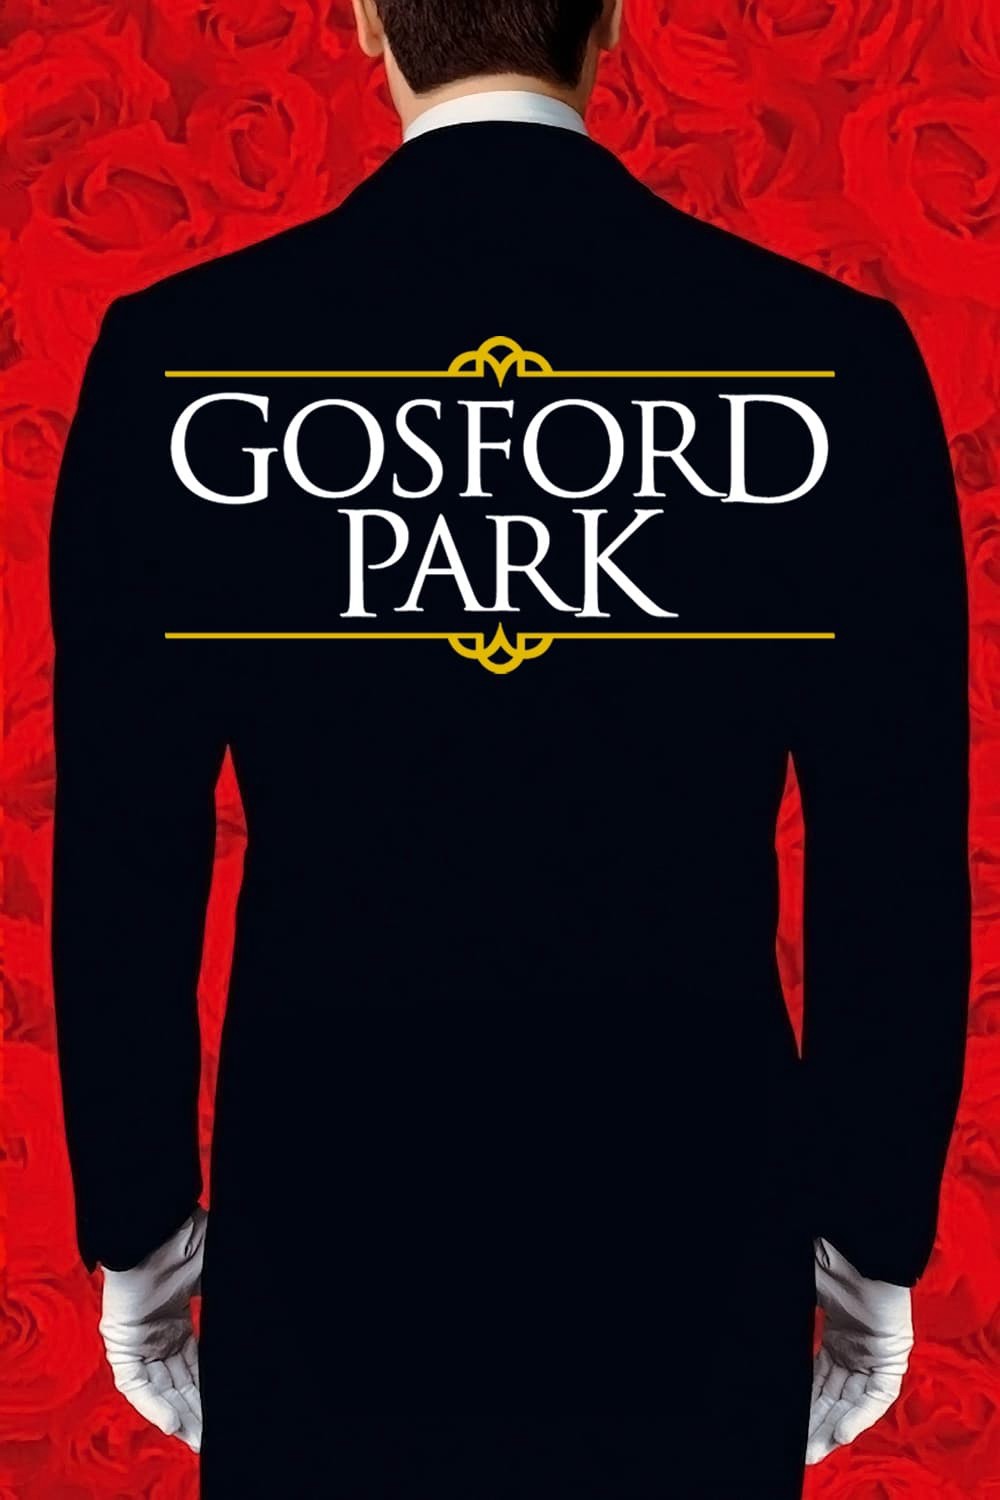 Gosford Park - Gosford Park